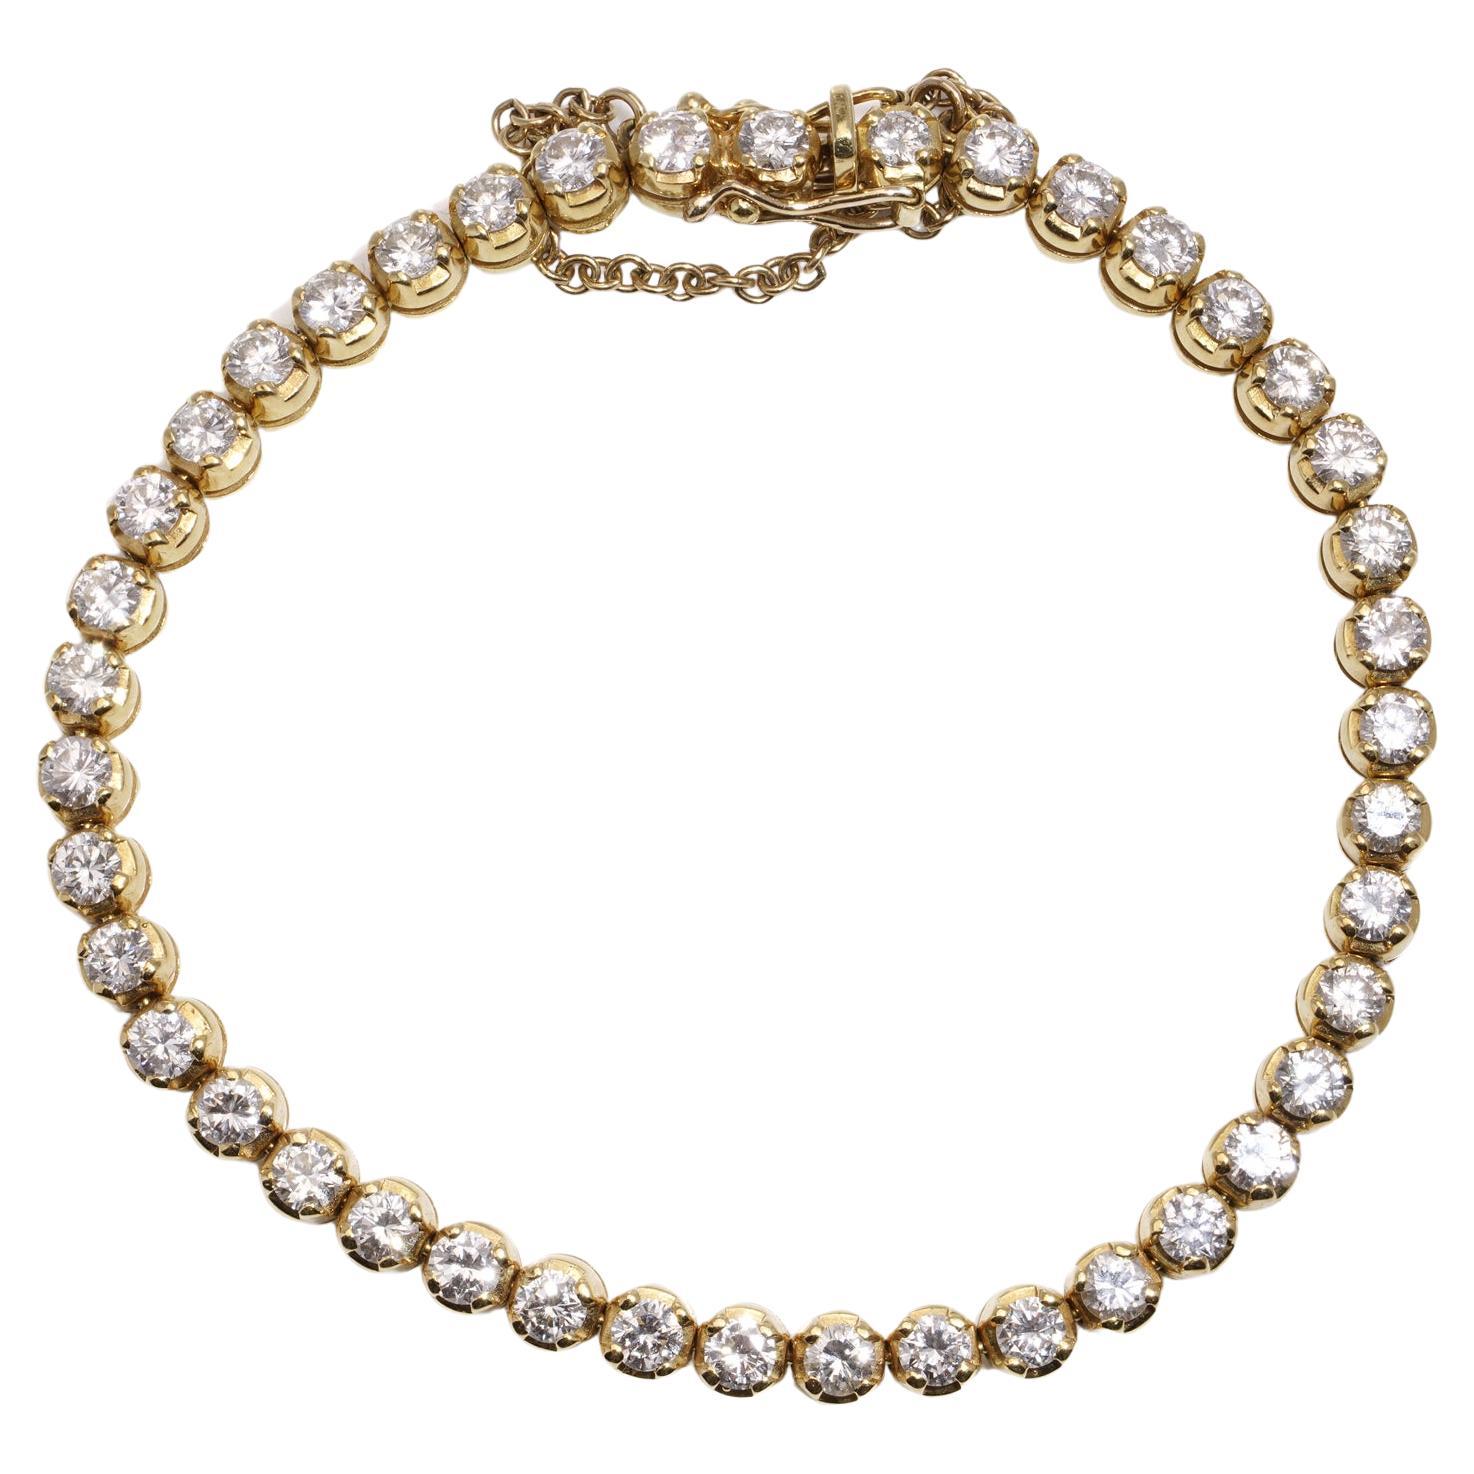 18kt gold tennis bracelet set with 6.30 carats of round brilliant diamonds  For Sale